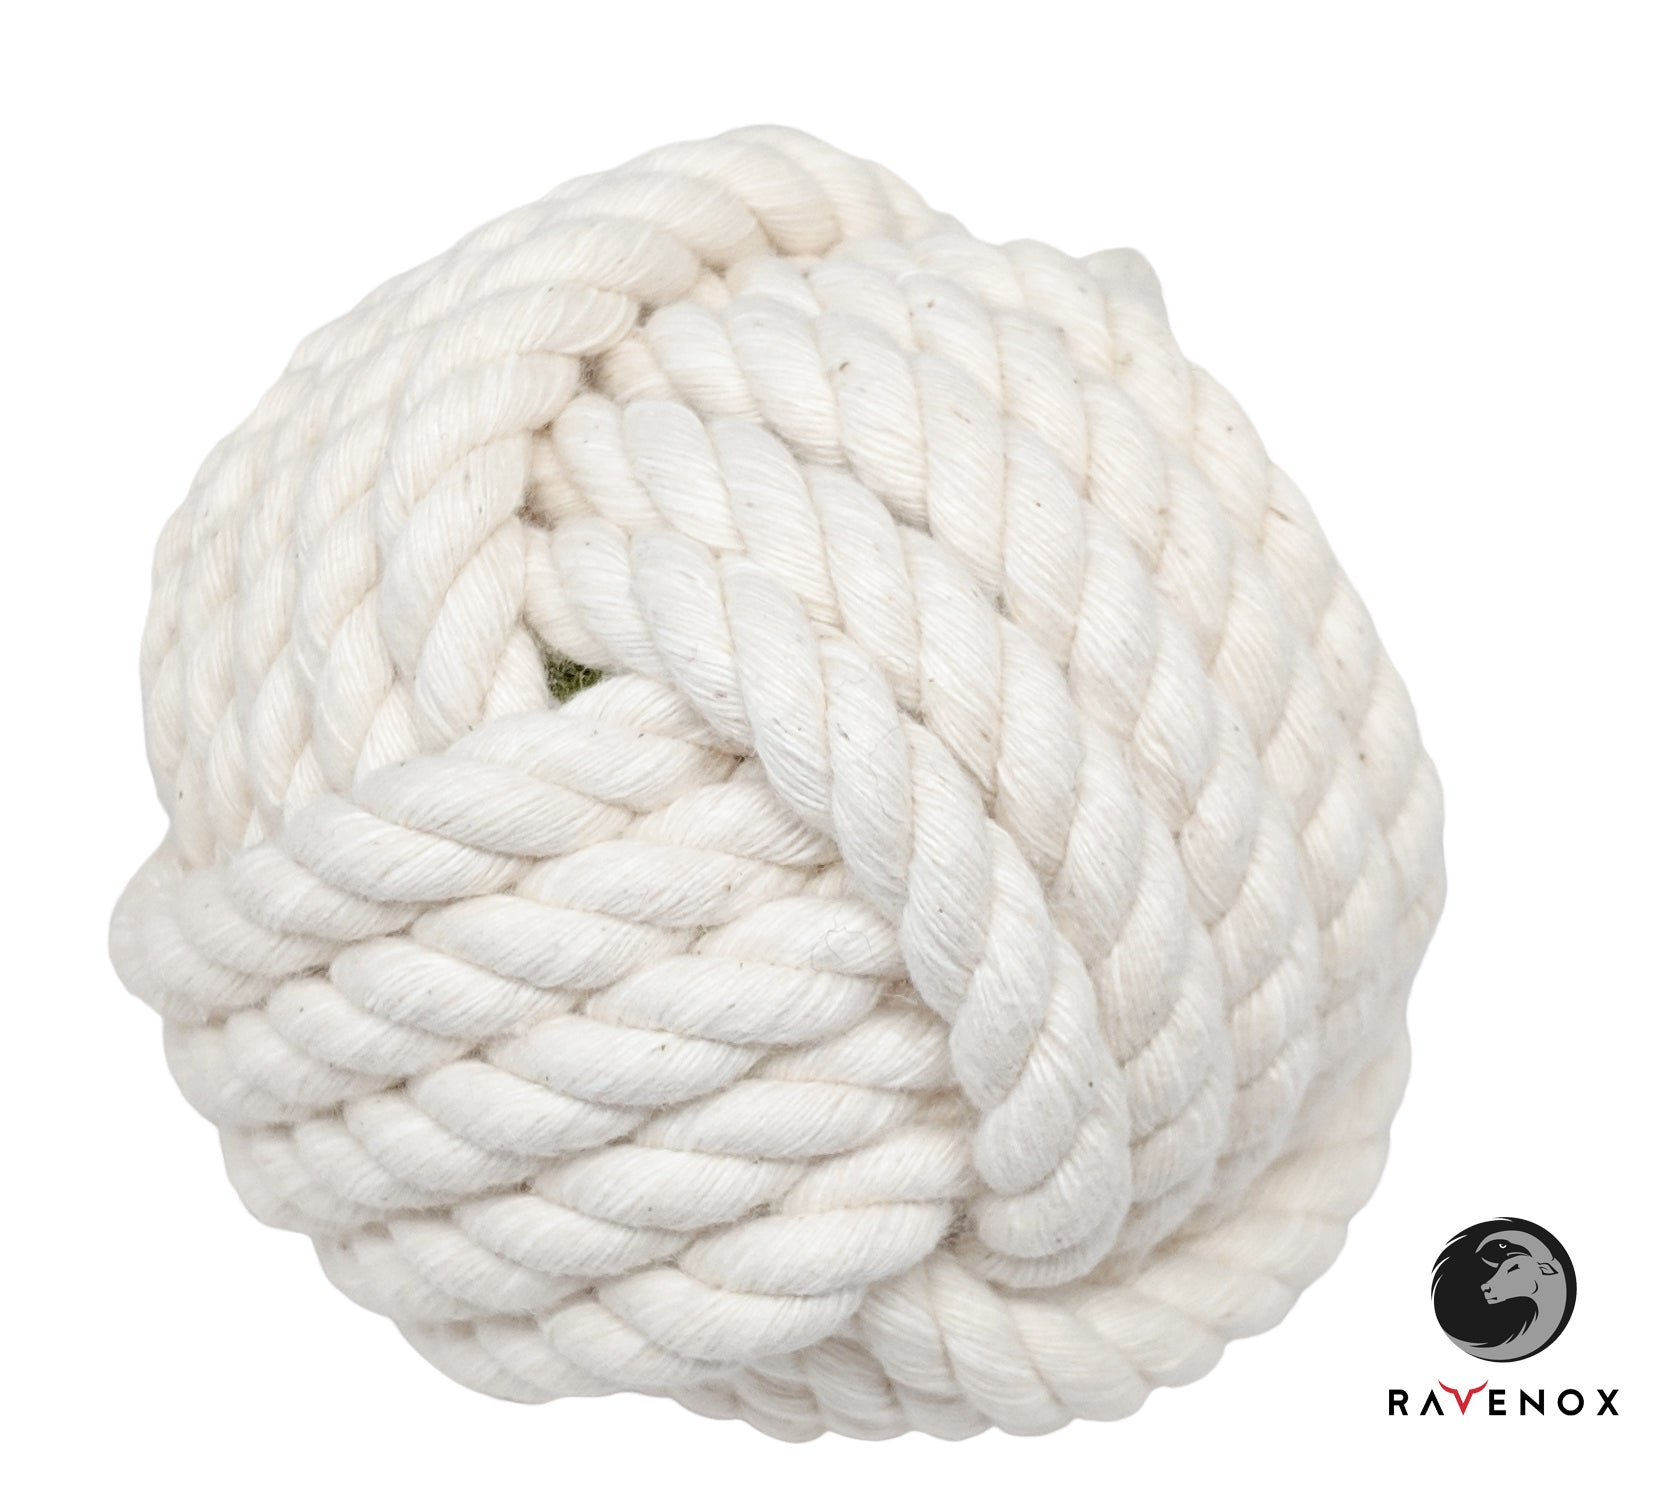 Ravenox Decorative Nautical Rope Balls | Home Decor Centerpieces Natural White